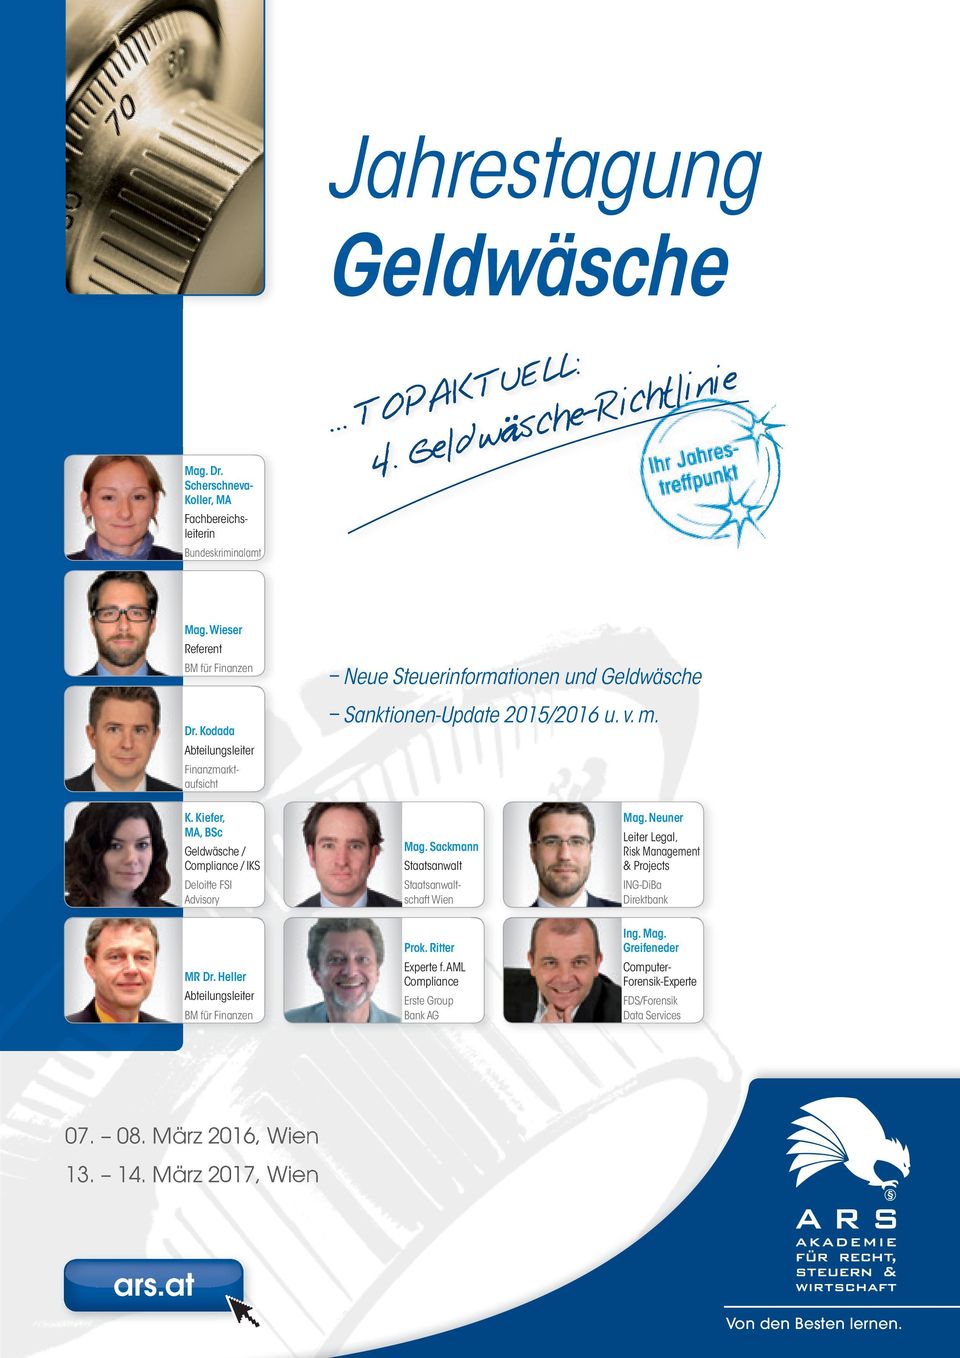 Kiefer, MA, BSc Geldwäsche / Compliance / IKS Deloitte FSI Advisory Mag. Sackmann Staatsanwalt Staatsanwaltschaft Wien Mag.